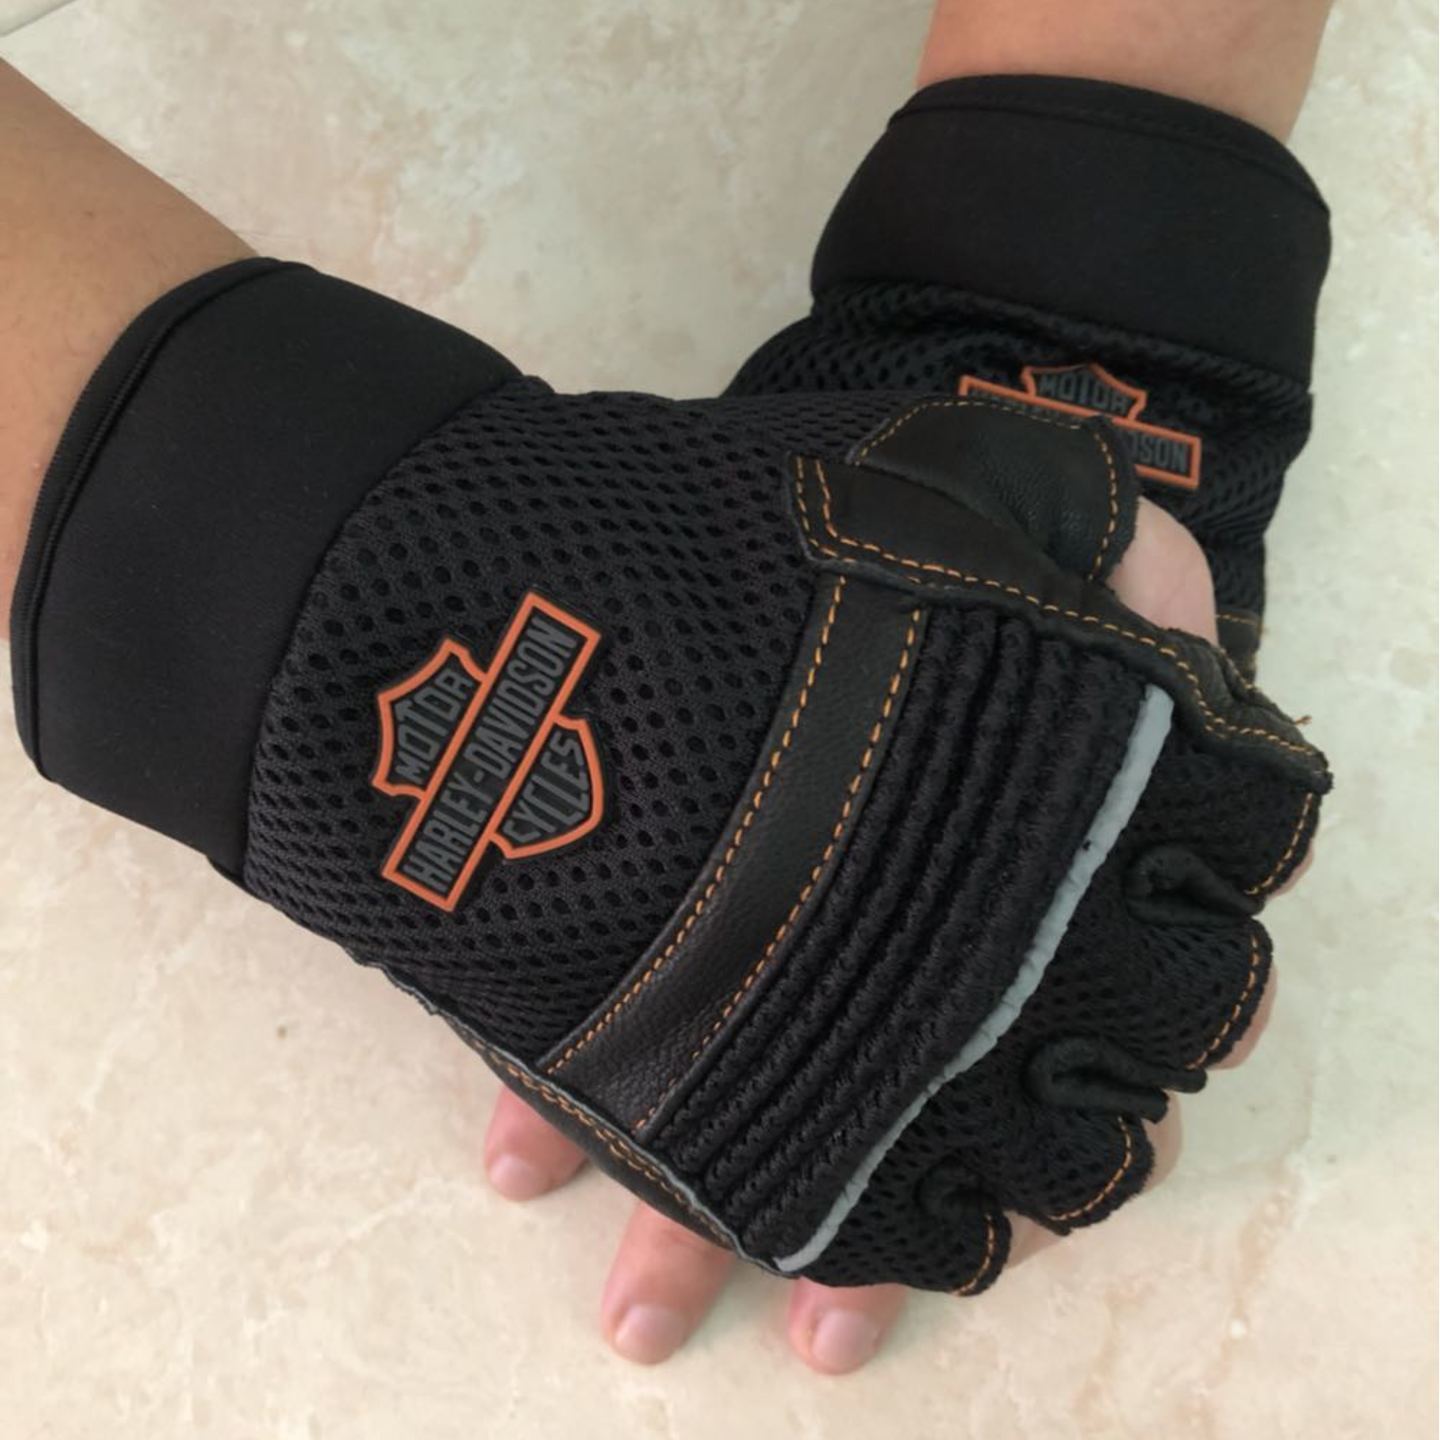 Harley Davidson perforated air half fingerless gloves